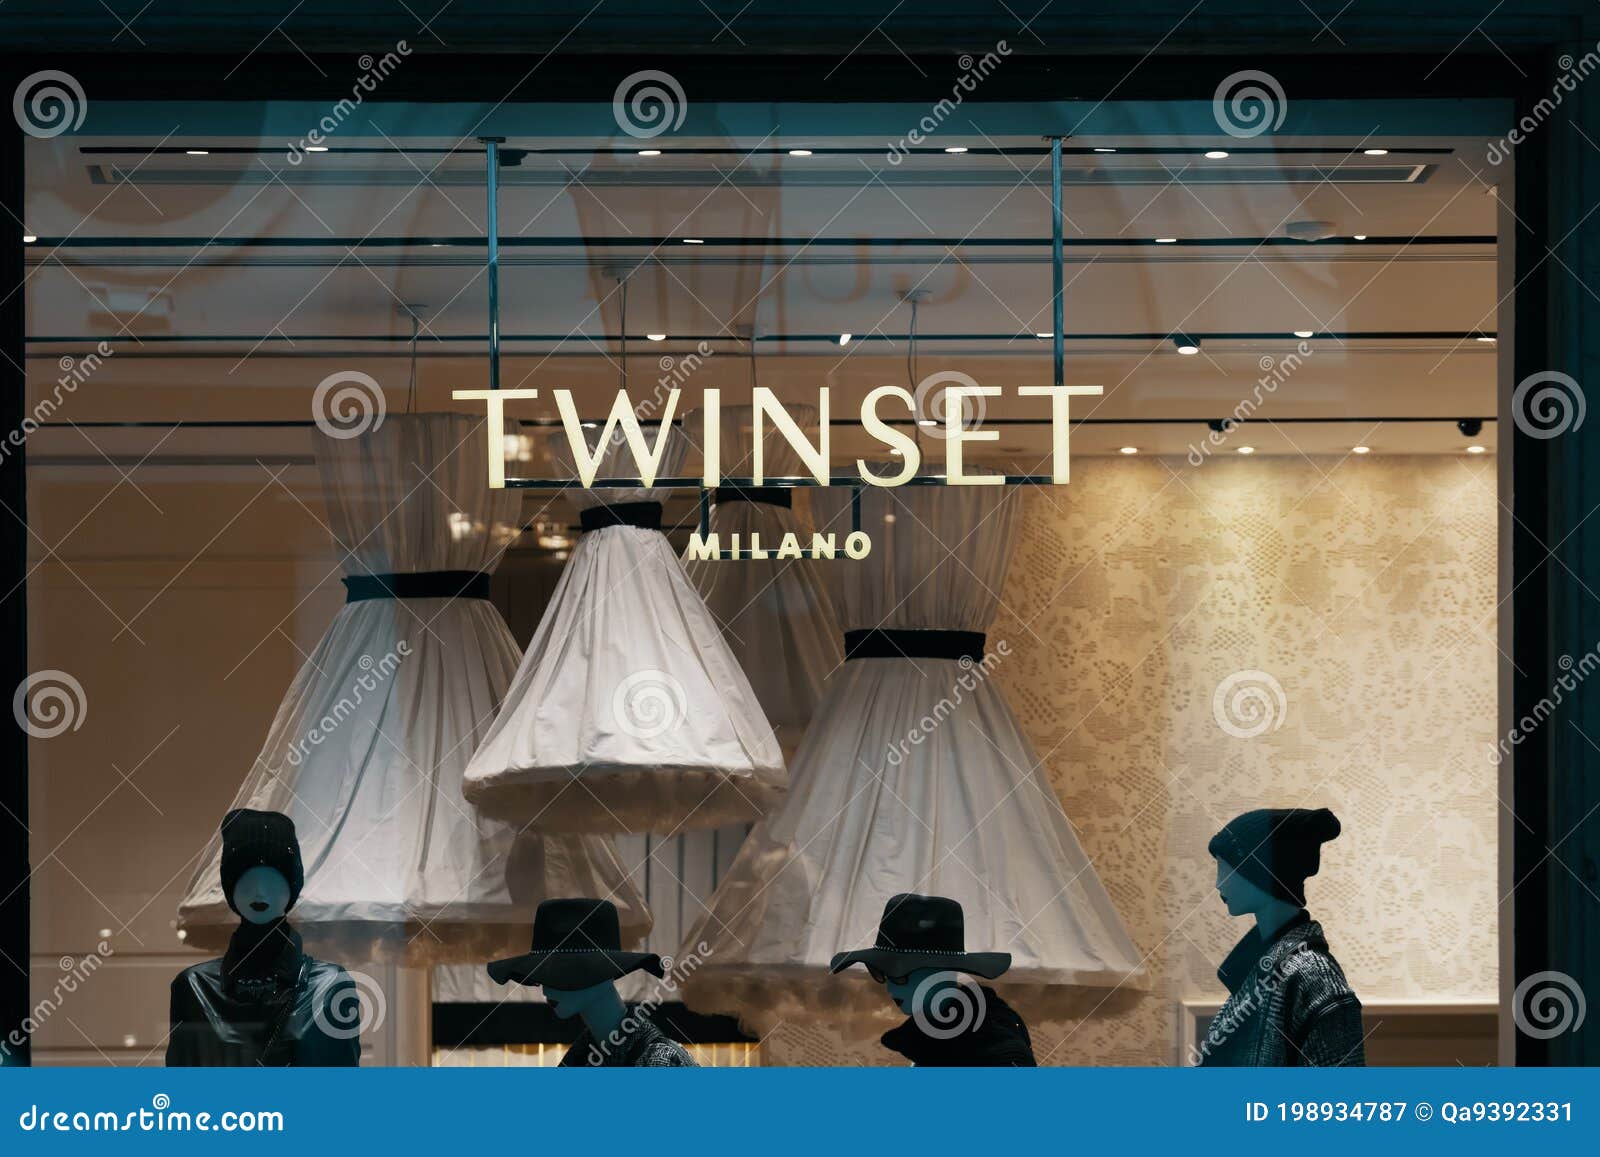 Twinset Milano Logo and Showcase of the Shop. Bergamo, Italy - 29.12.2019  Editorial Photography - Image of logo, design: 198934787